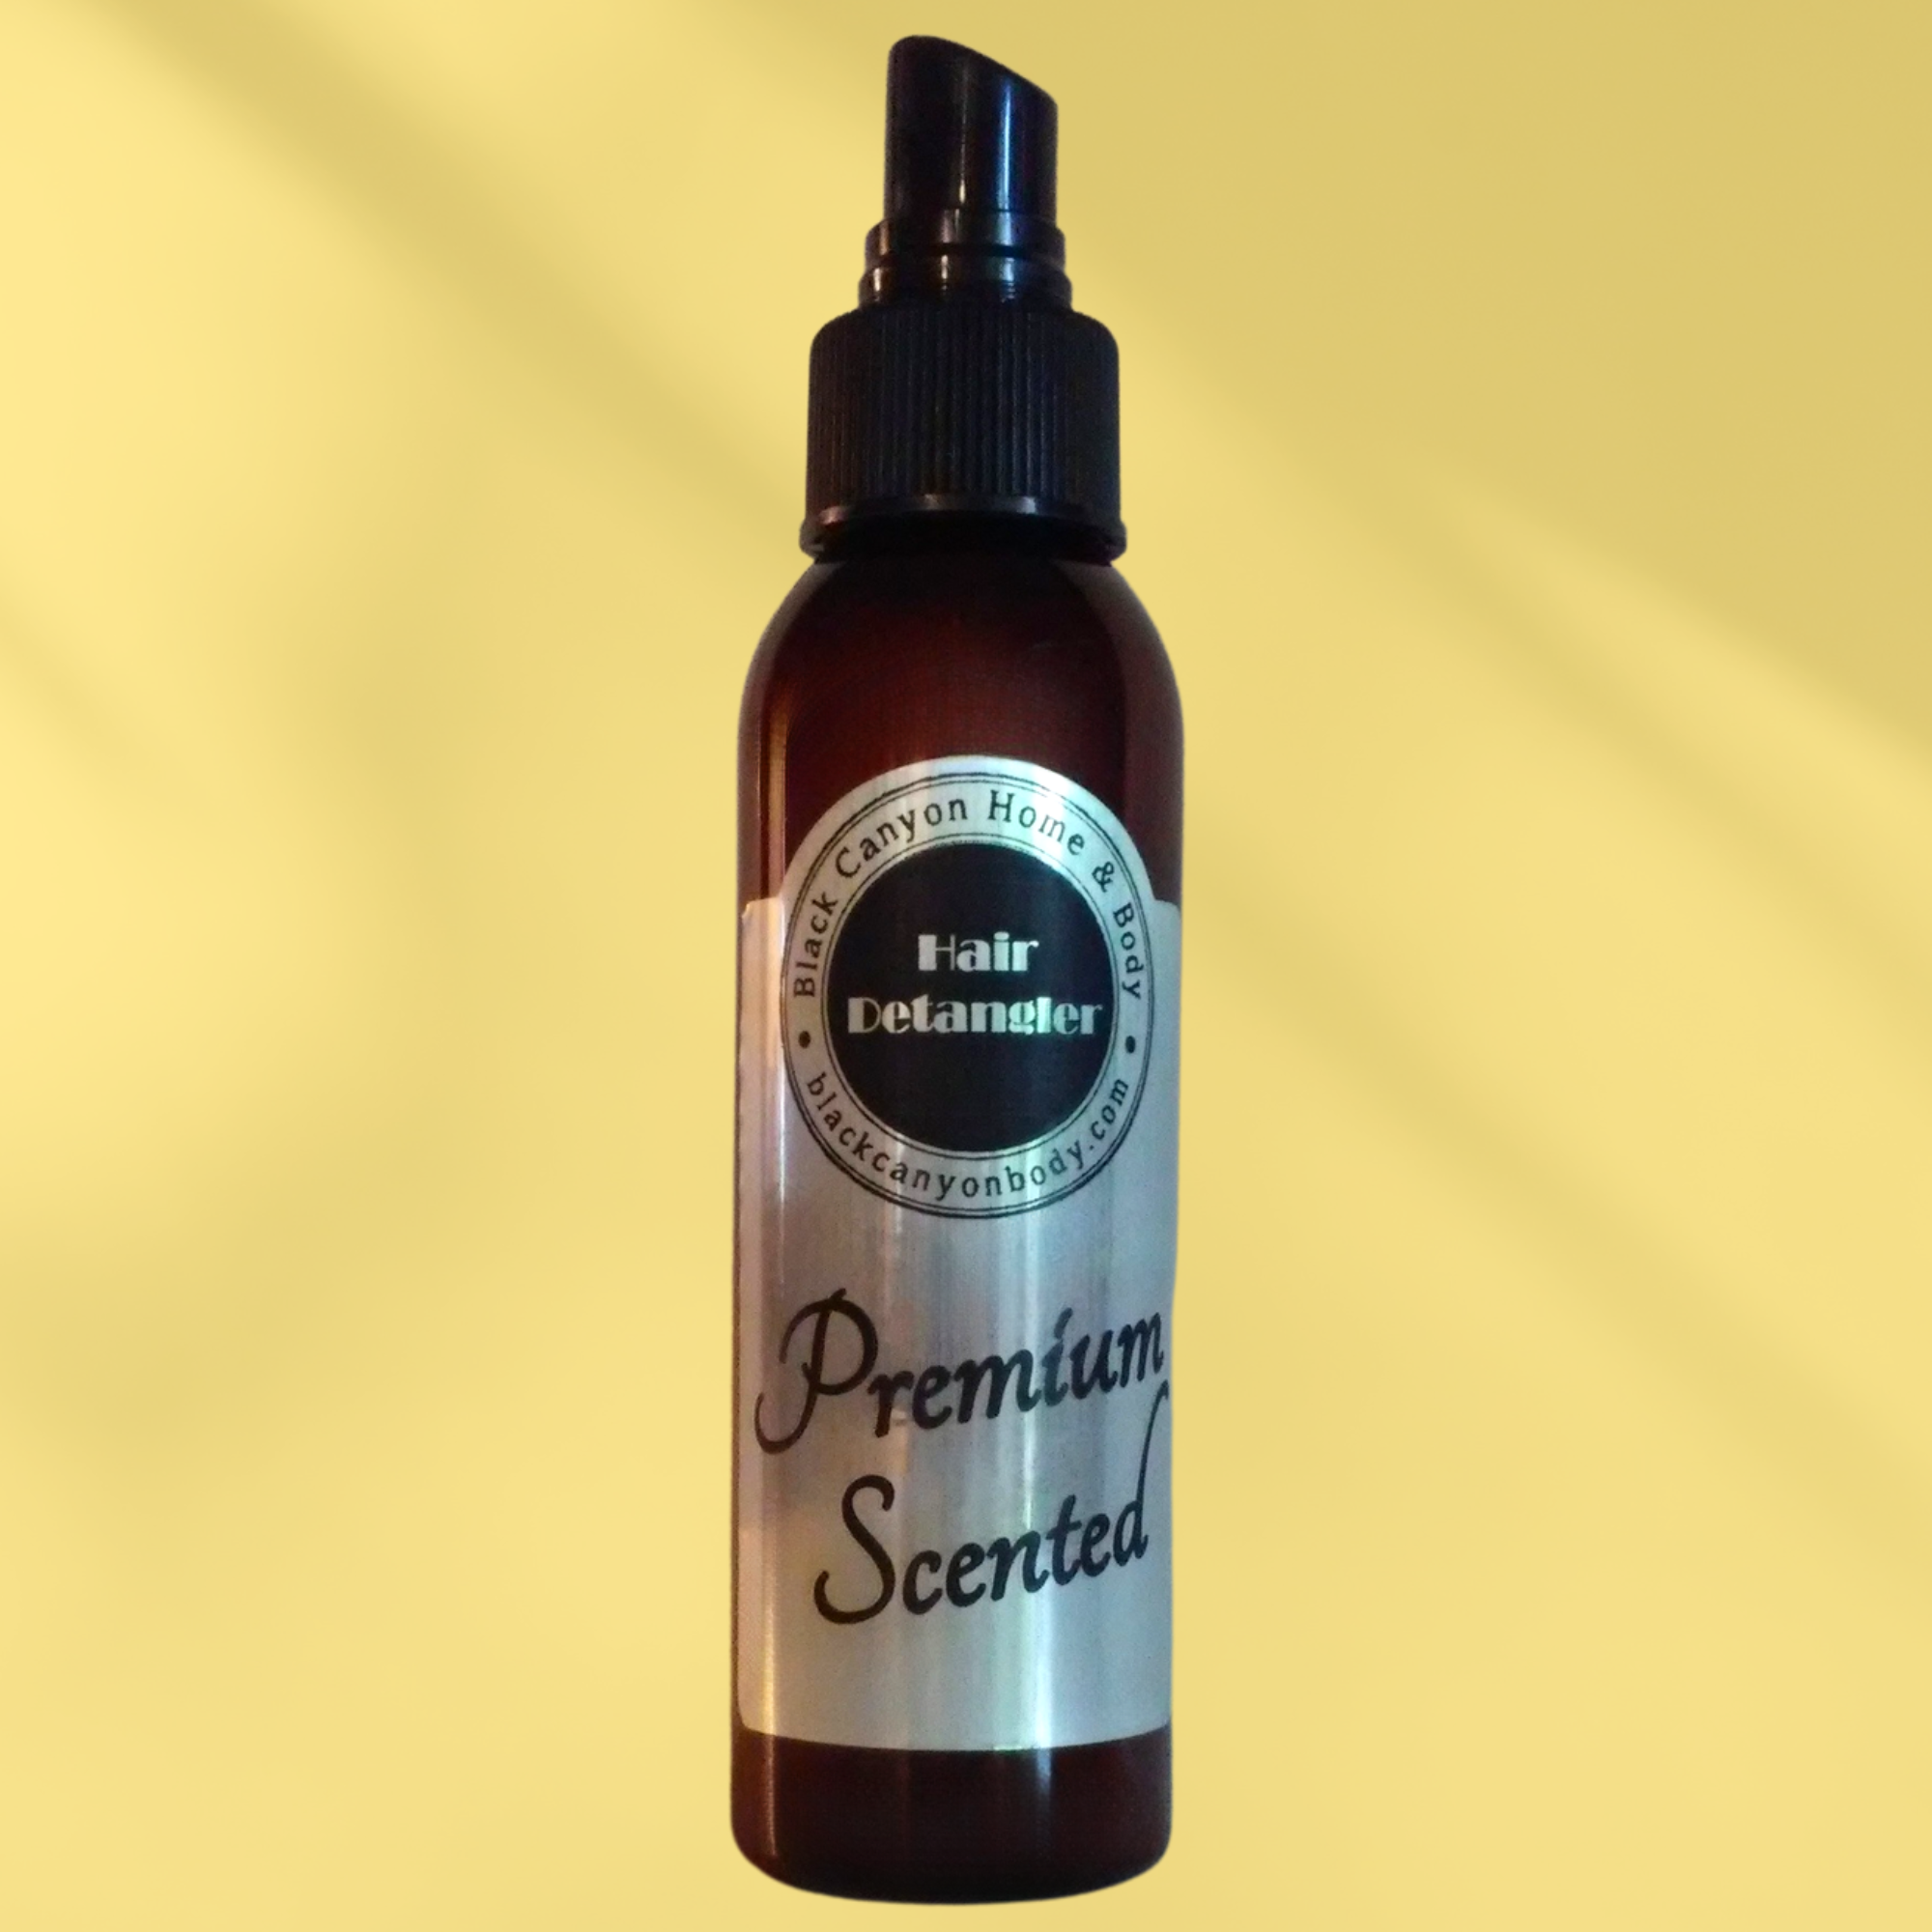 Black Canyon Grape Soda Scented Hair Detangler Spray with Olive Oil